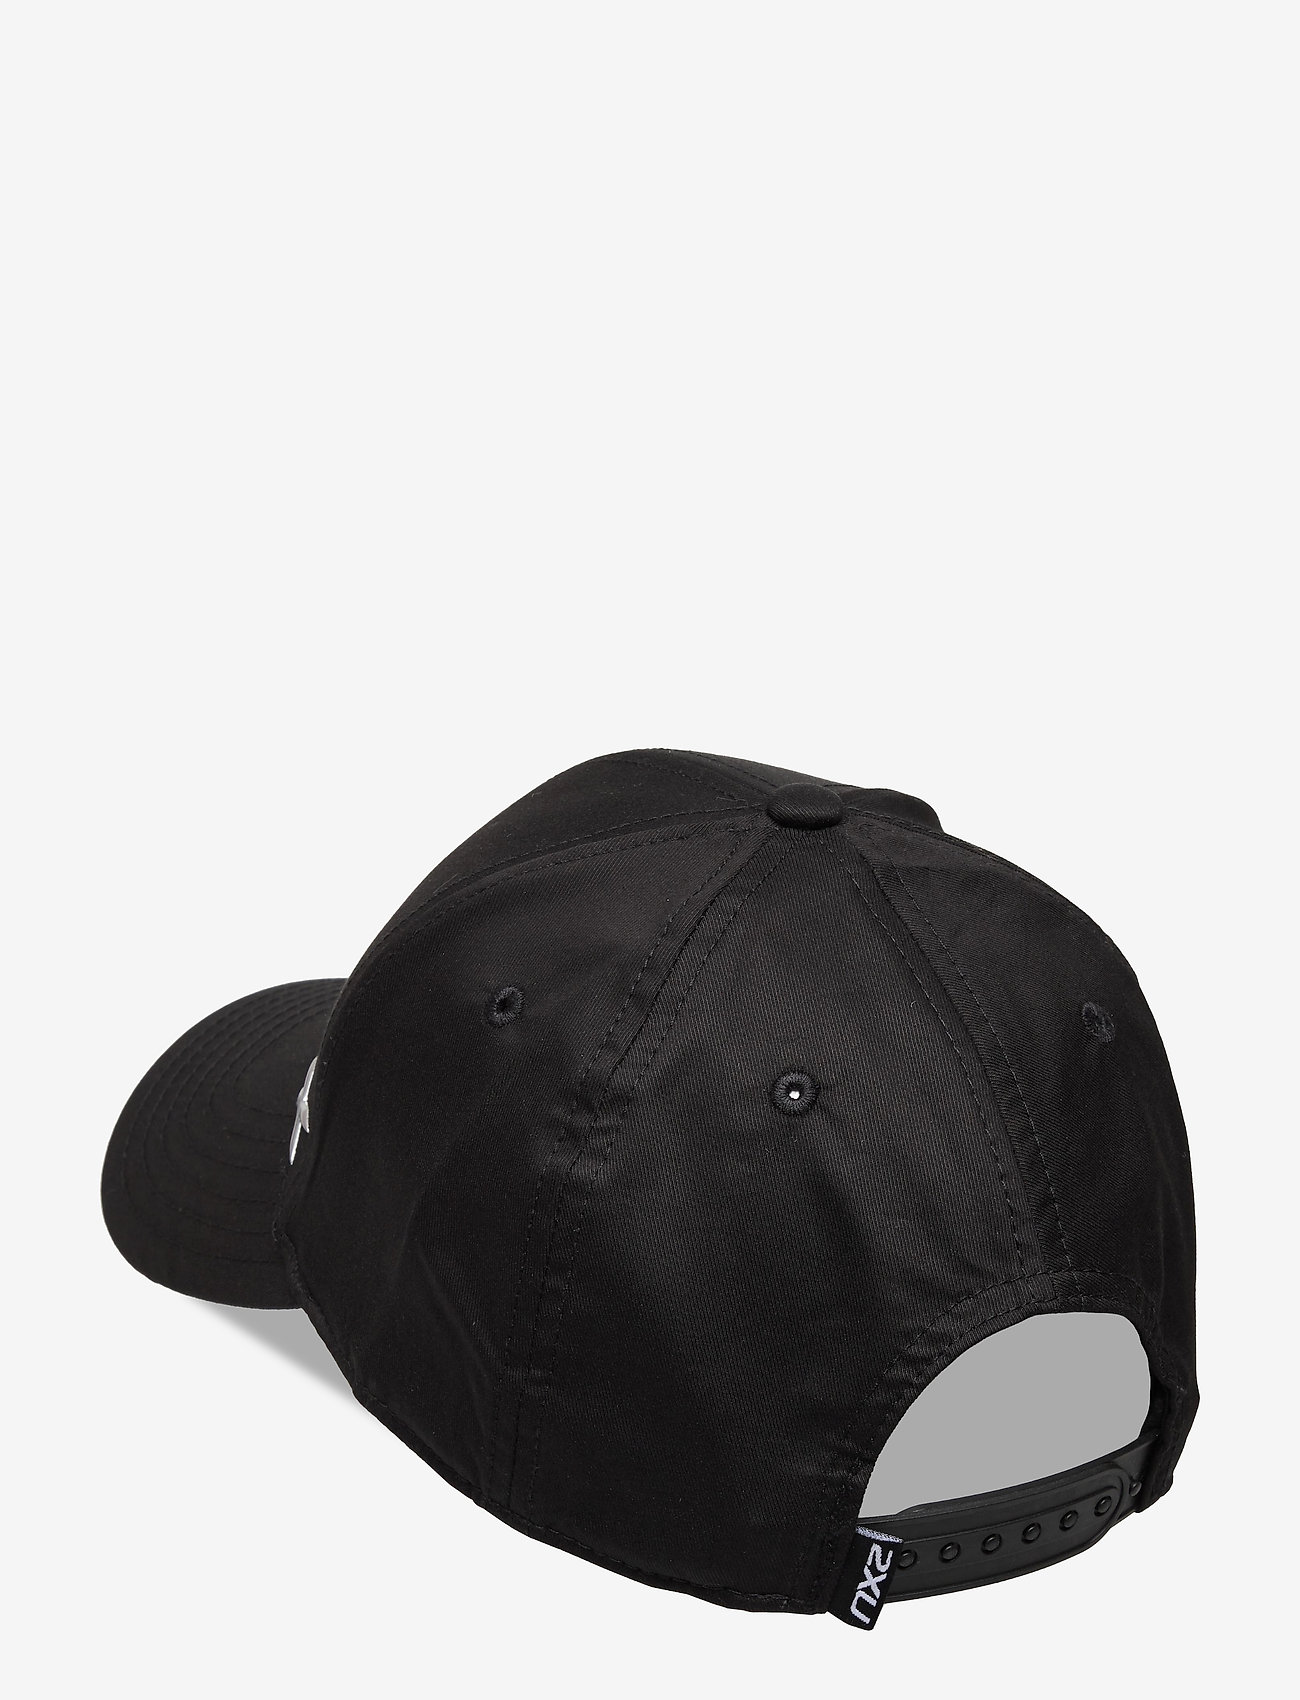 2XU - MULTIPLY CAP - black/silver - 1